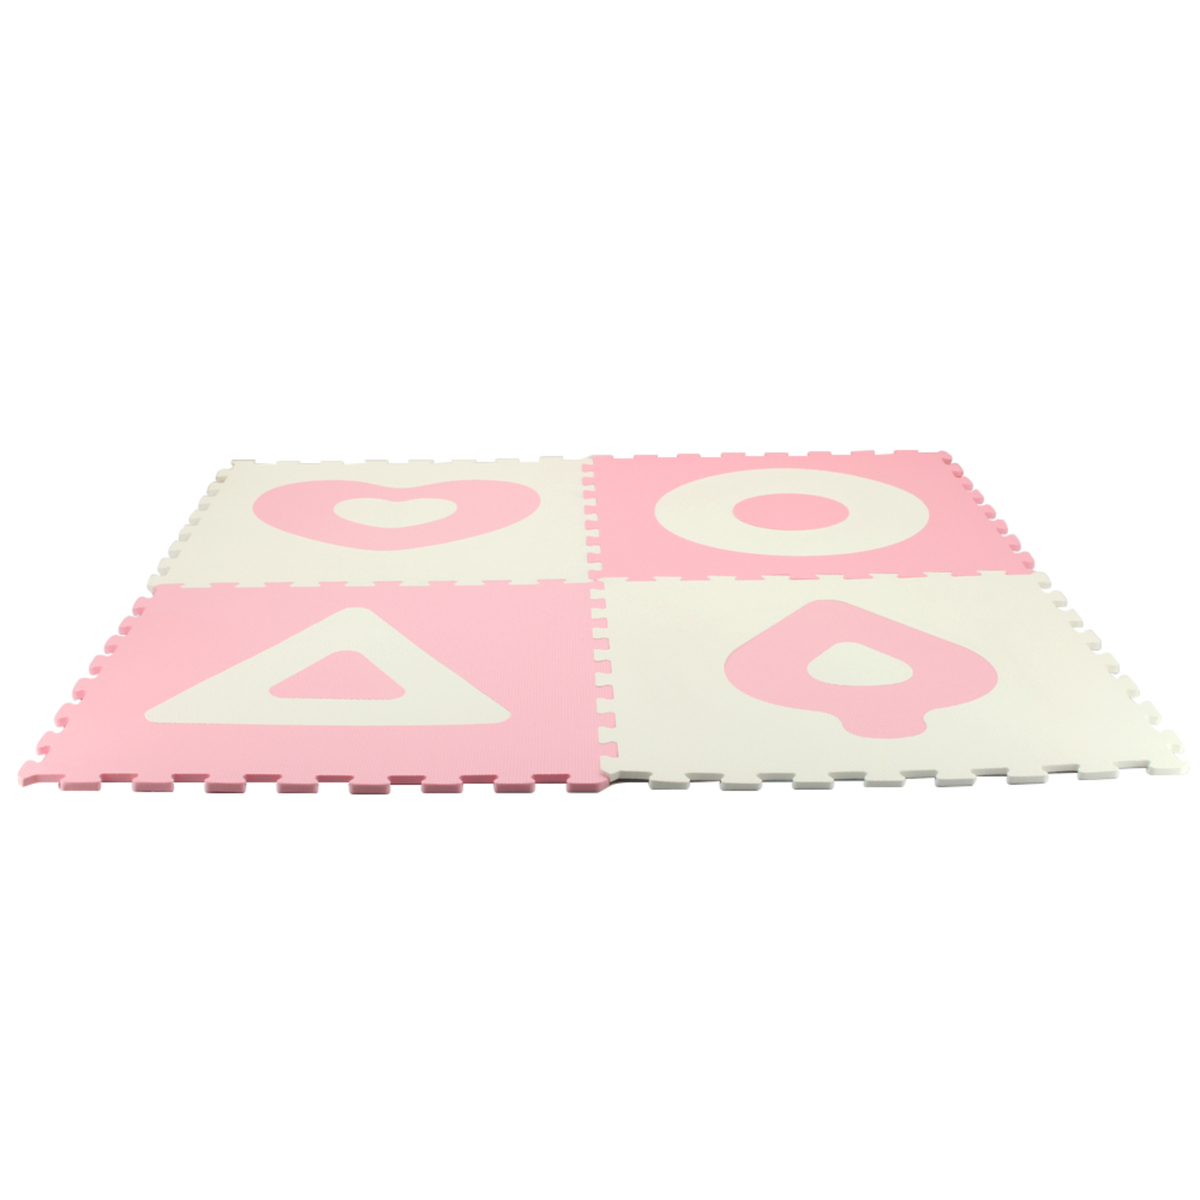 Sunta Puzzle Mat, Pack of 4, Pink/White, 2114/10B3-PK/WHT